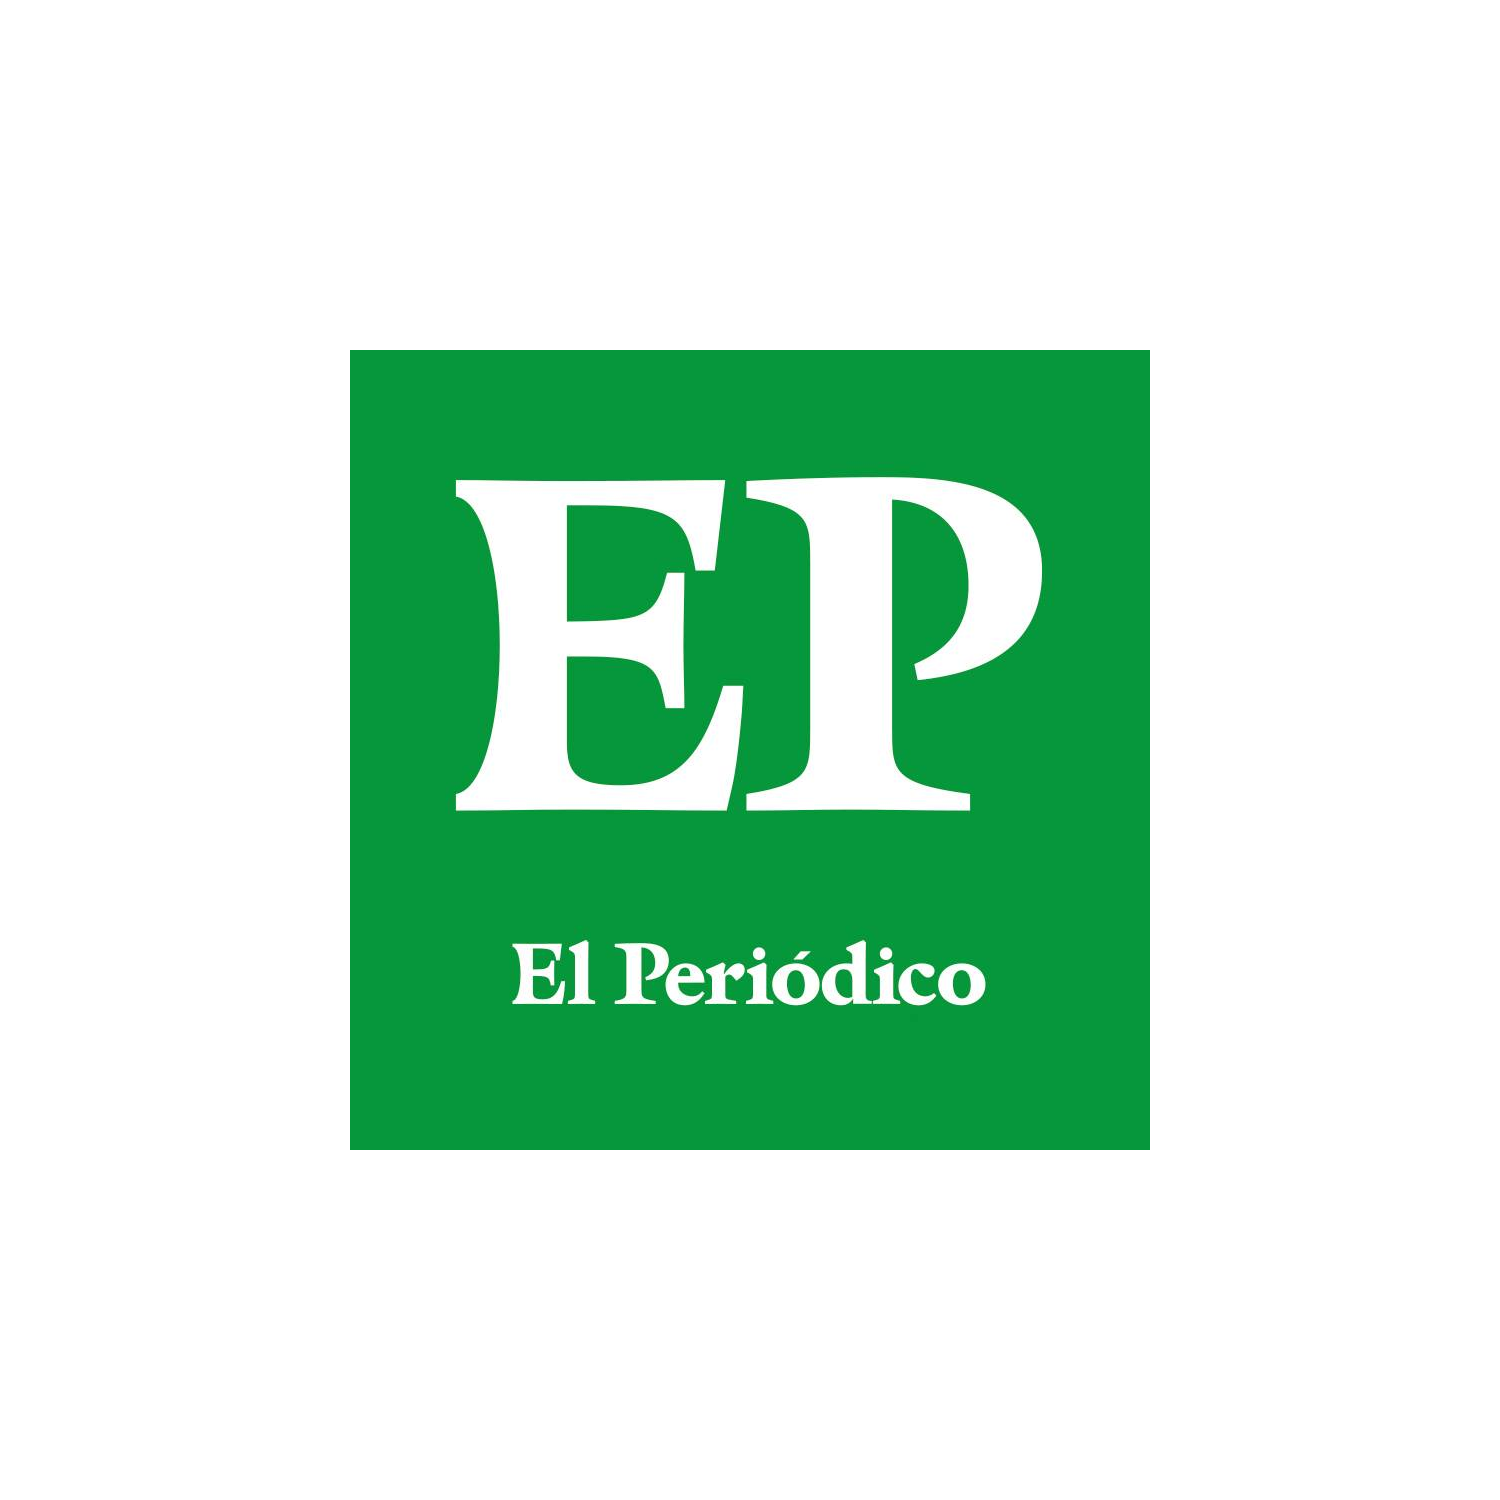 27/06/2017 “Ya se desarrolla la “Expo Polo Educativo”